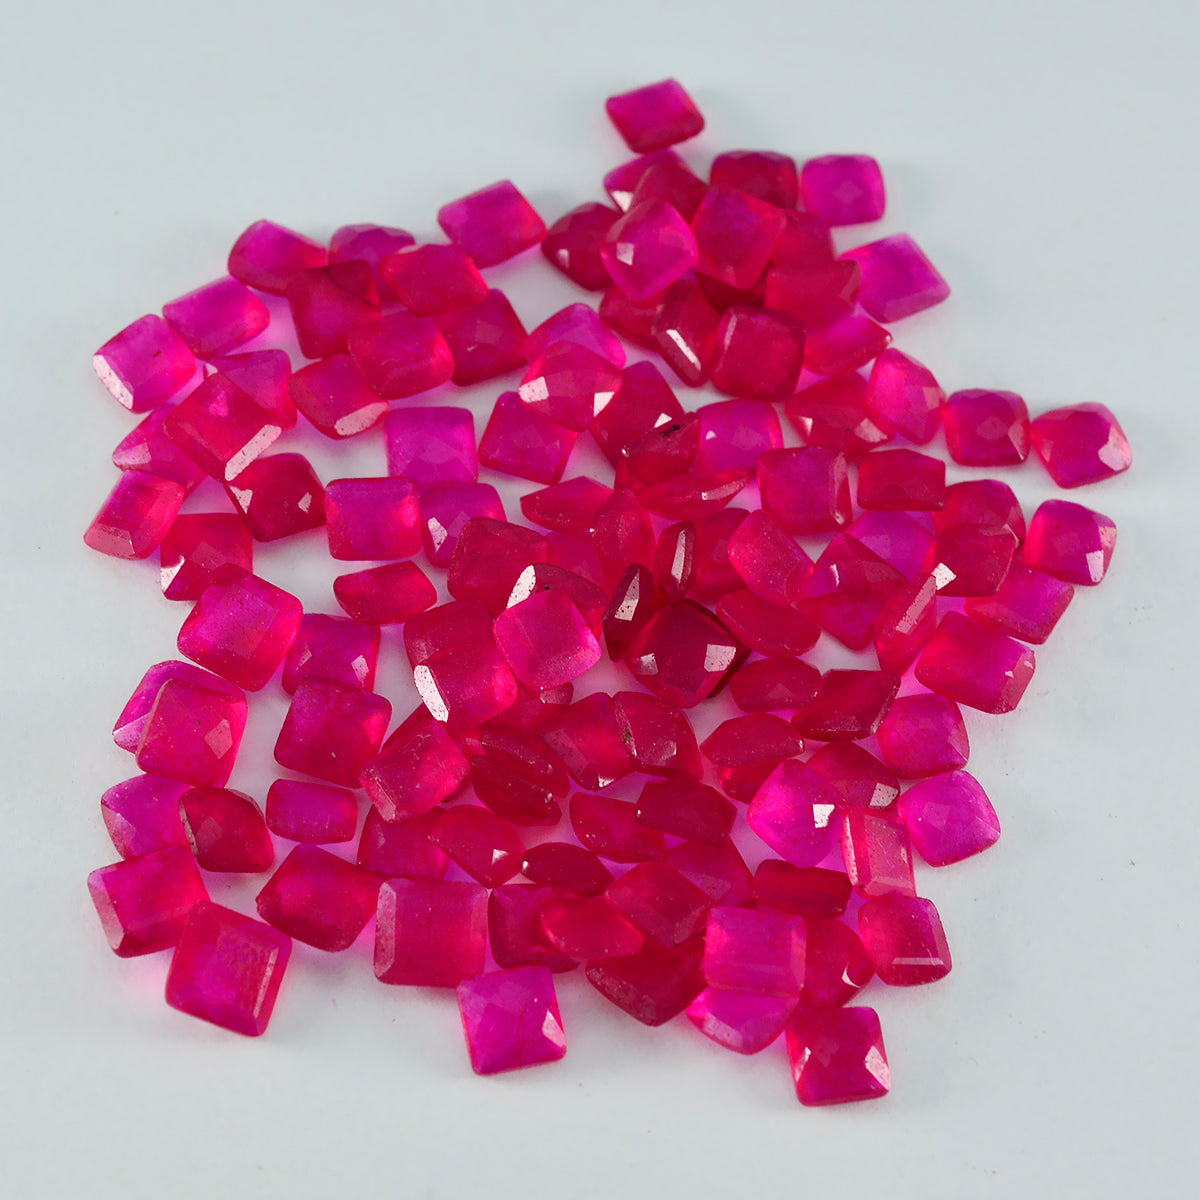 Riyogems 1PC echte rode jaspis gefacetteerd 5x5 mm vierkante vorm A1 kwaliteit edelsteen